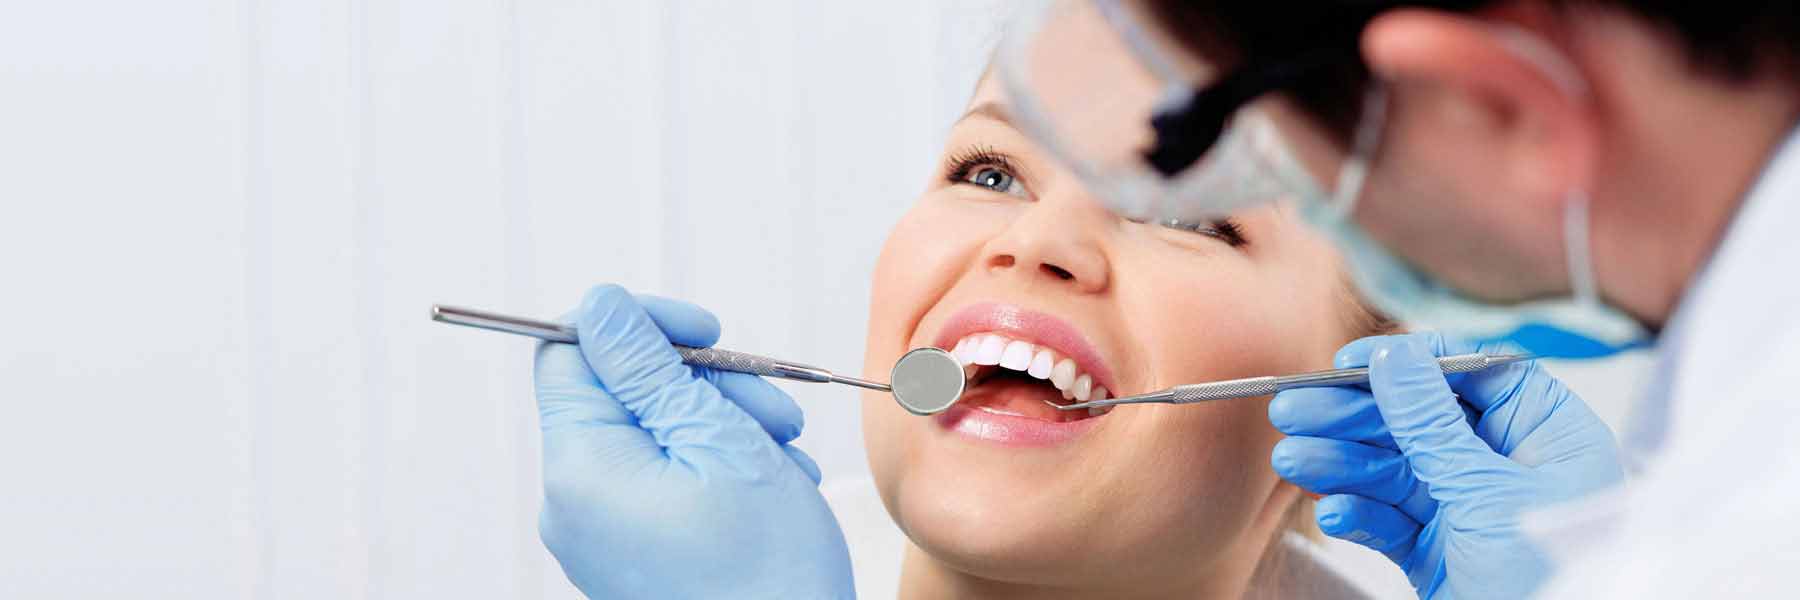 Dental Service in Beresfield - Tooth N Care